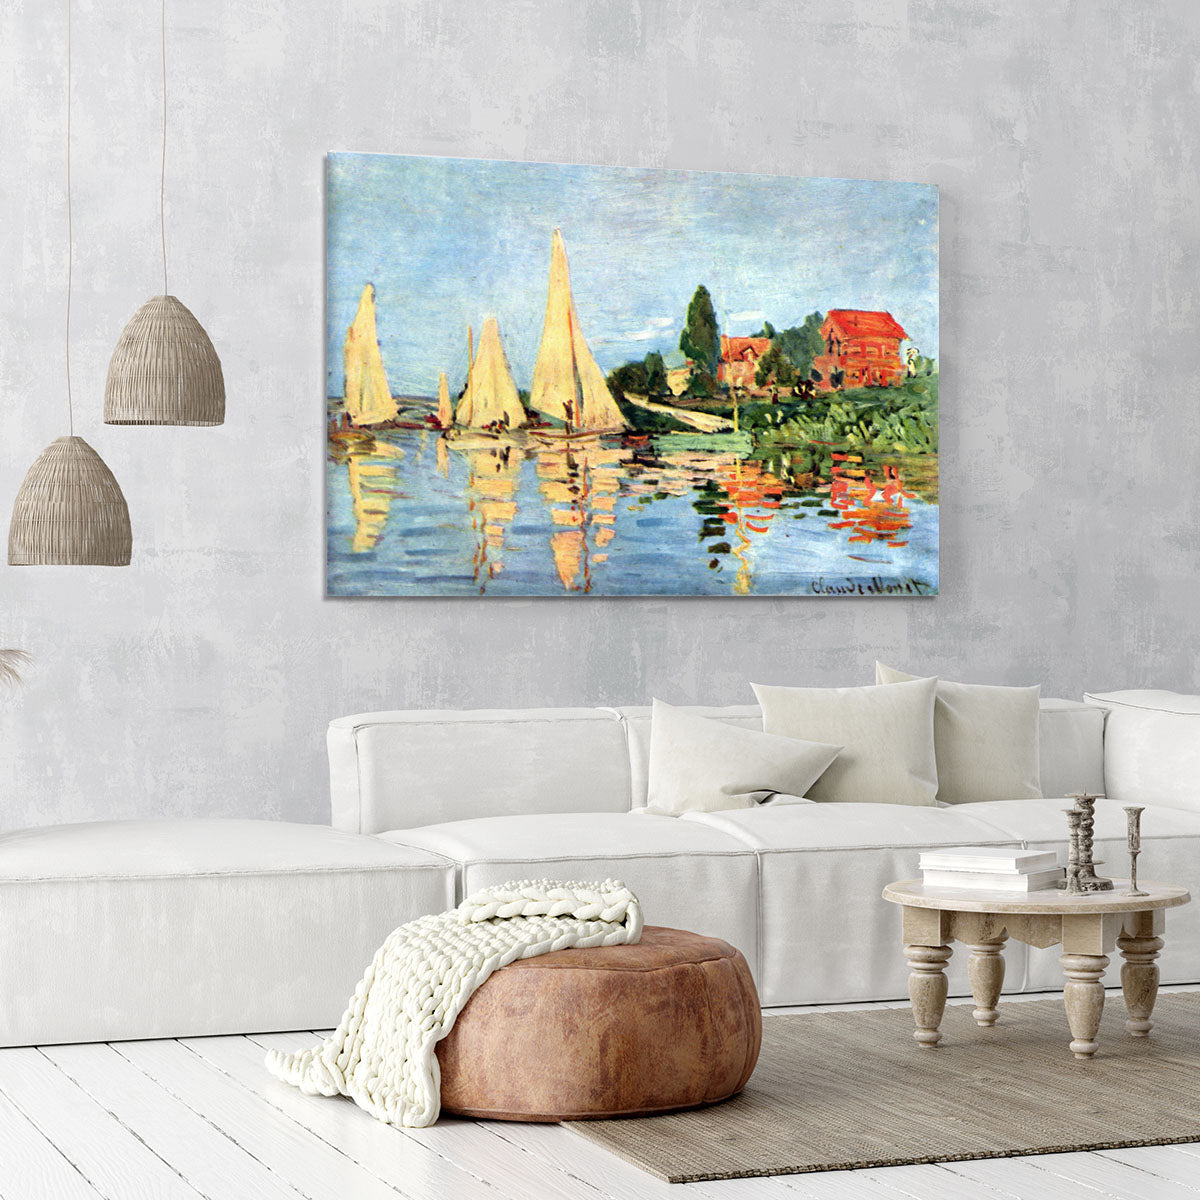 Regatta at Argenteuil by Monet Canvas Print or Poster - Canvas Art Rocks - 6